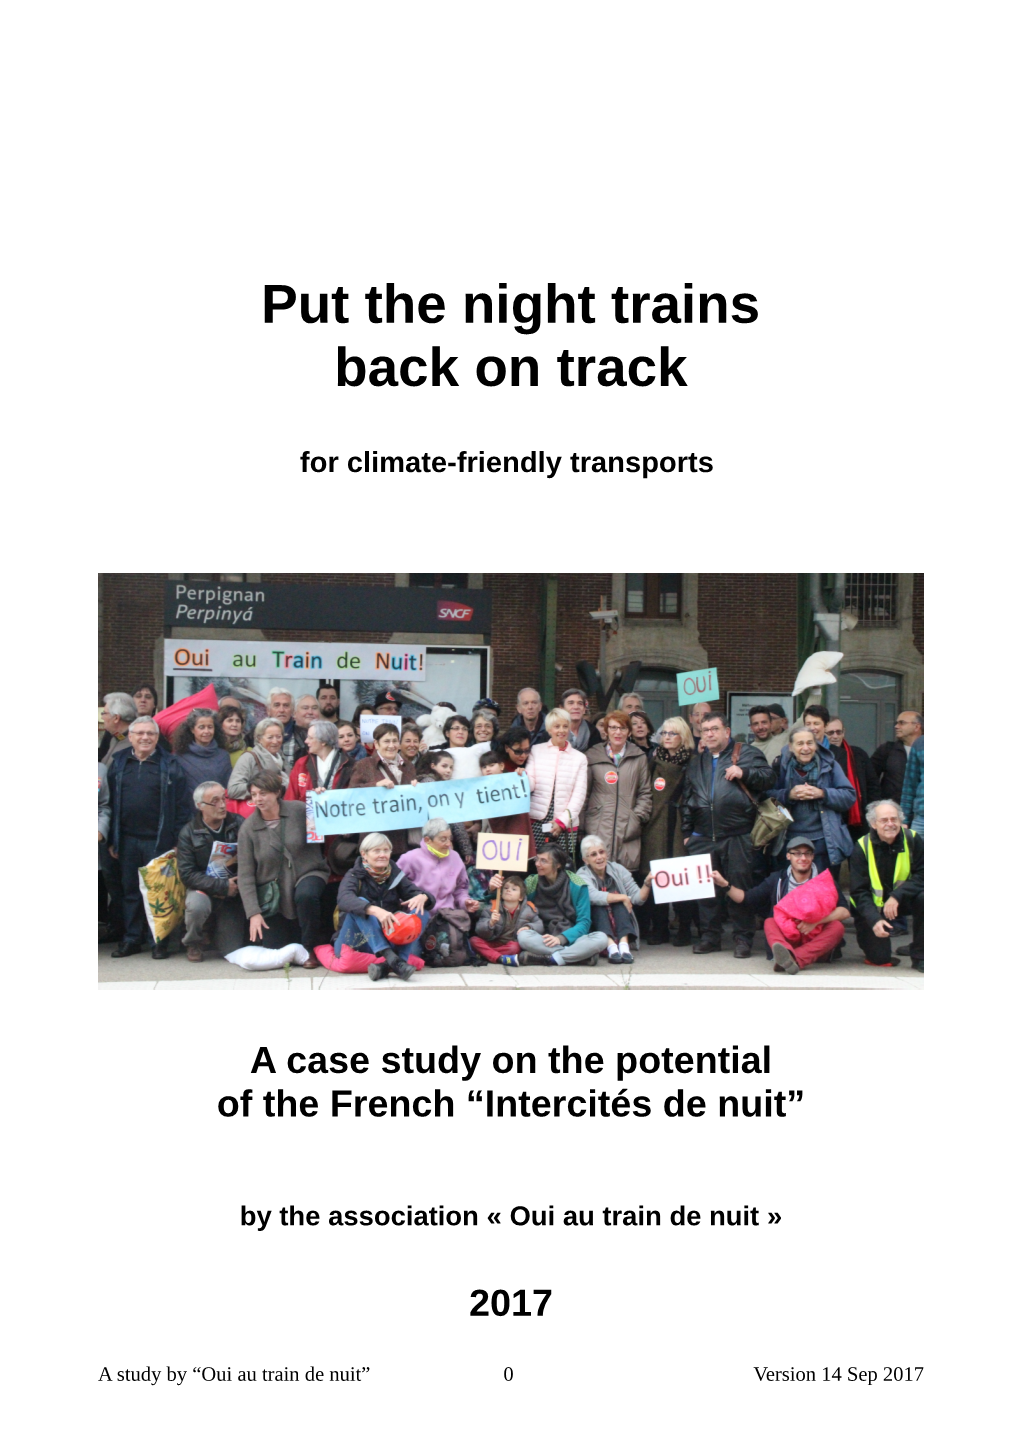 Put the Night Trains Back on Track